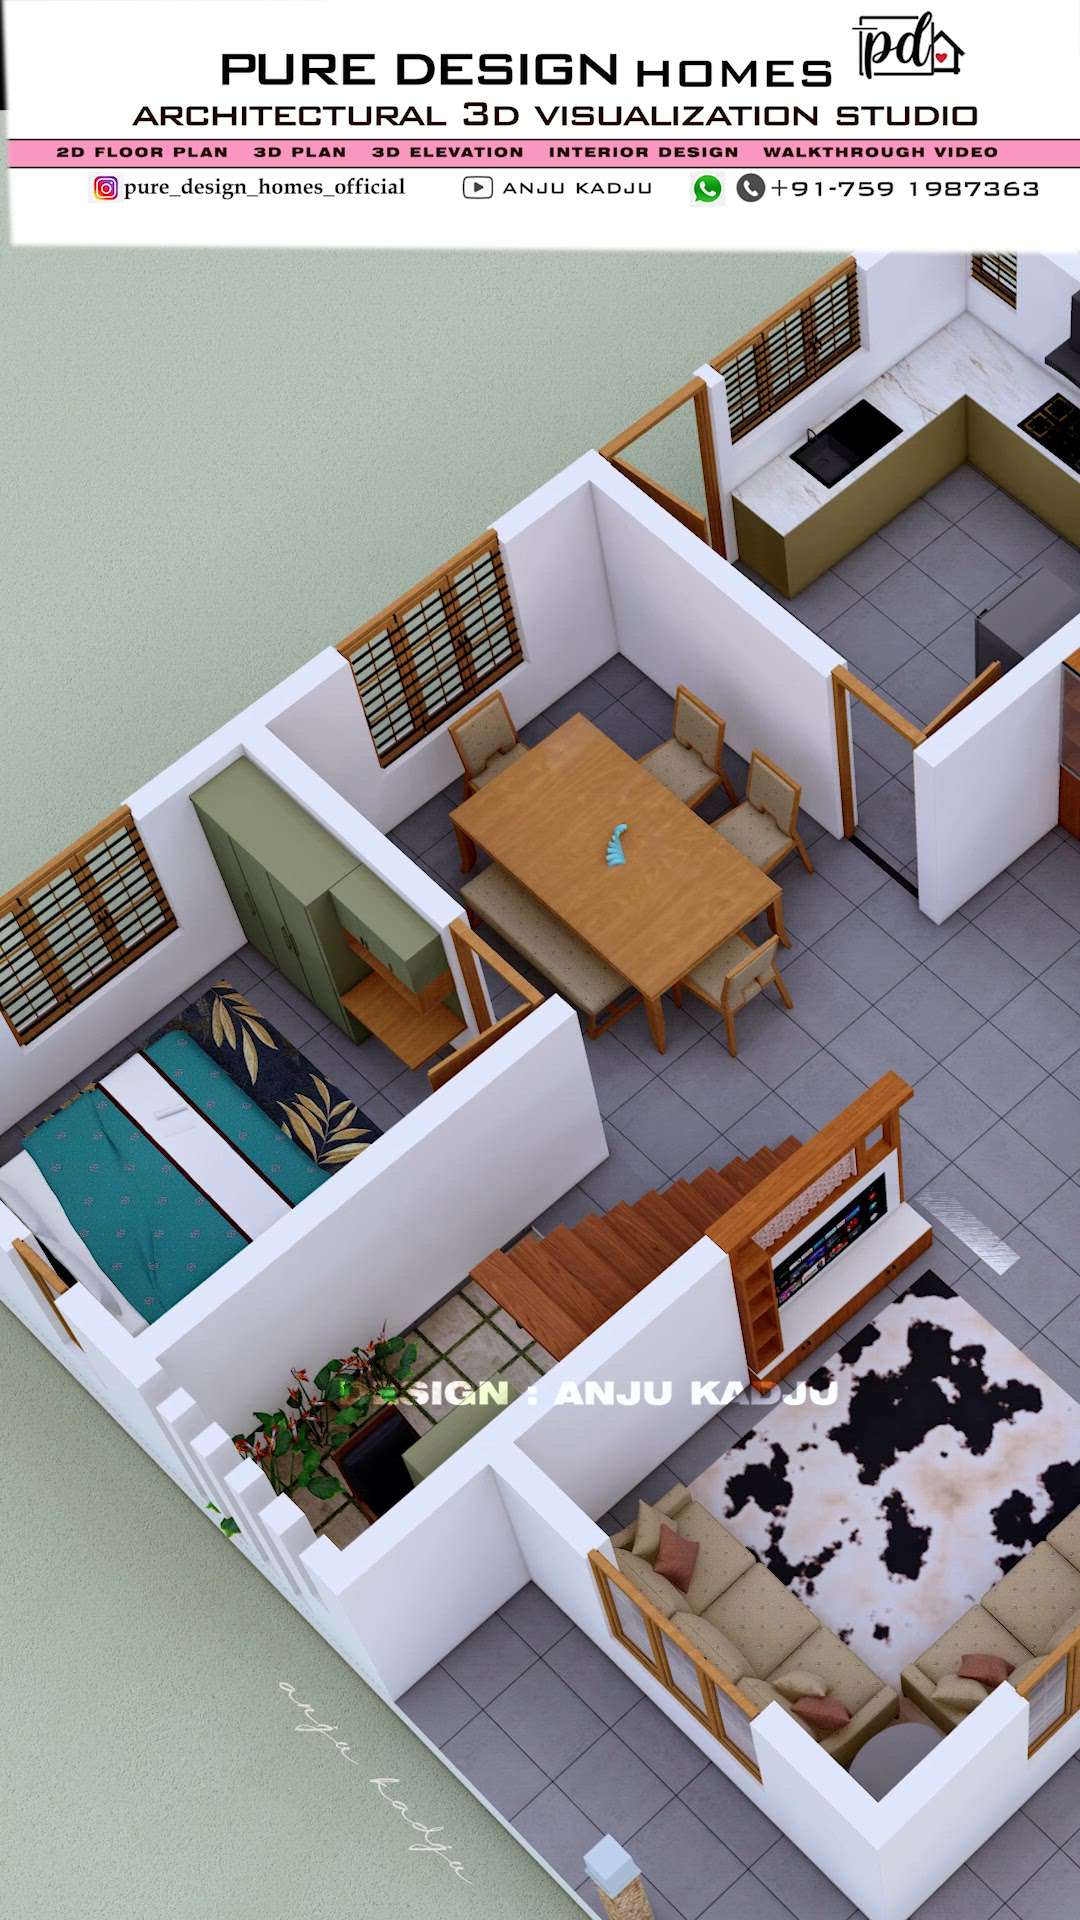 Budget friendly interior concept
3d floor plan / 3d plan / 2bhk / budget plan
Designed by anju kadju
+917591987363
3d floor plan / interior top view / 3d plan
നിങ്ങളുടെ വീടും ഇതുപോലെ ദൃശ്യവത്കരിച്ചു ലഭിക്കാൻ ഞങ്ങളുമായി ബന്ധപെടു.
Anju kadju
+917591987363 (WhatsApp )
Architectural 3d designer
#3dfloorplan #interiortopview #interiordesigner #3dplan #online3ddesigner